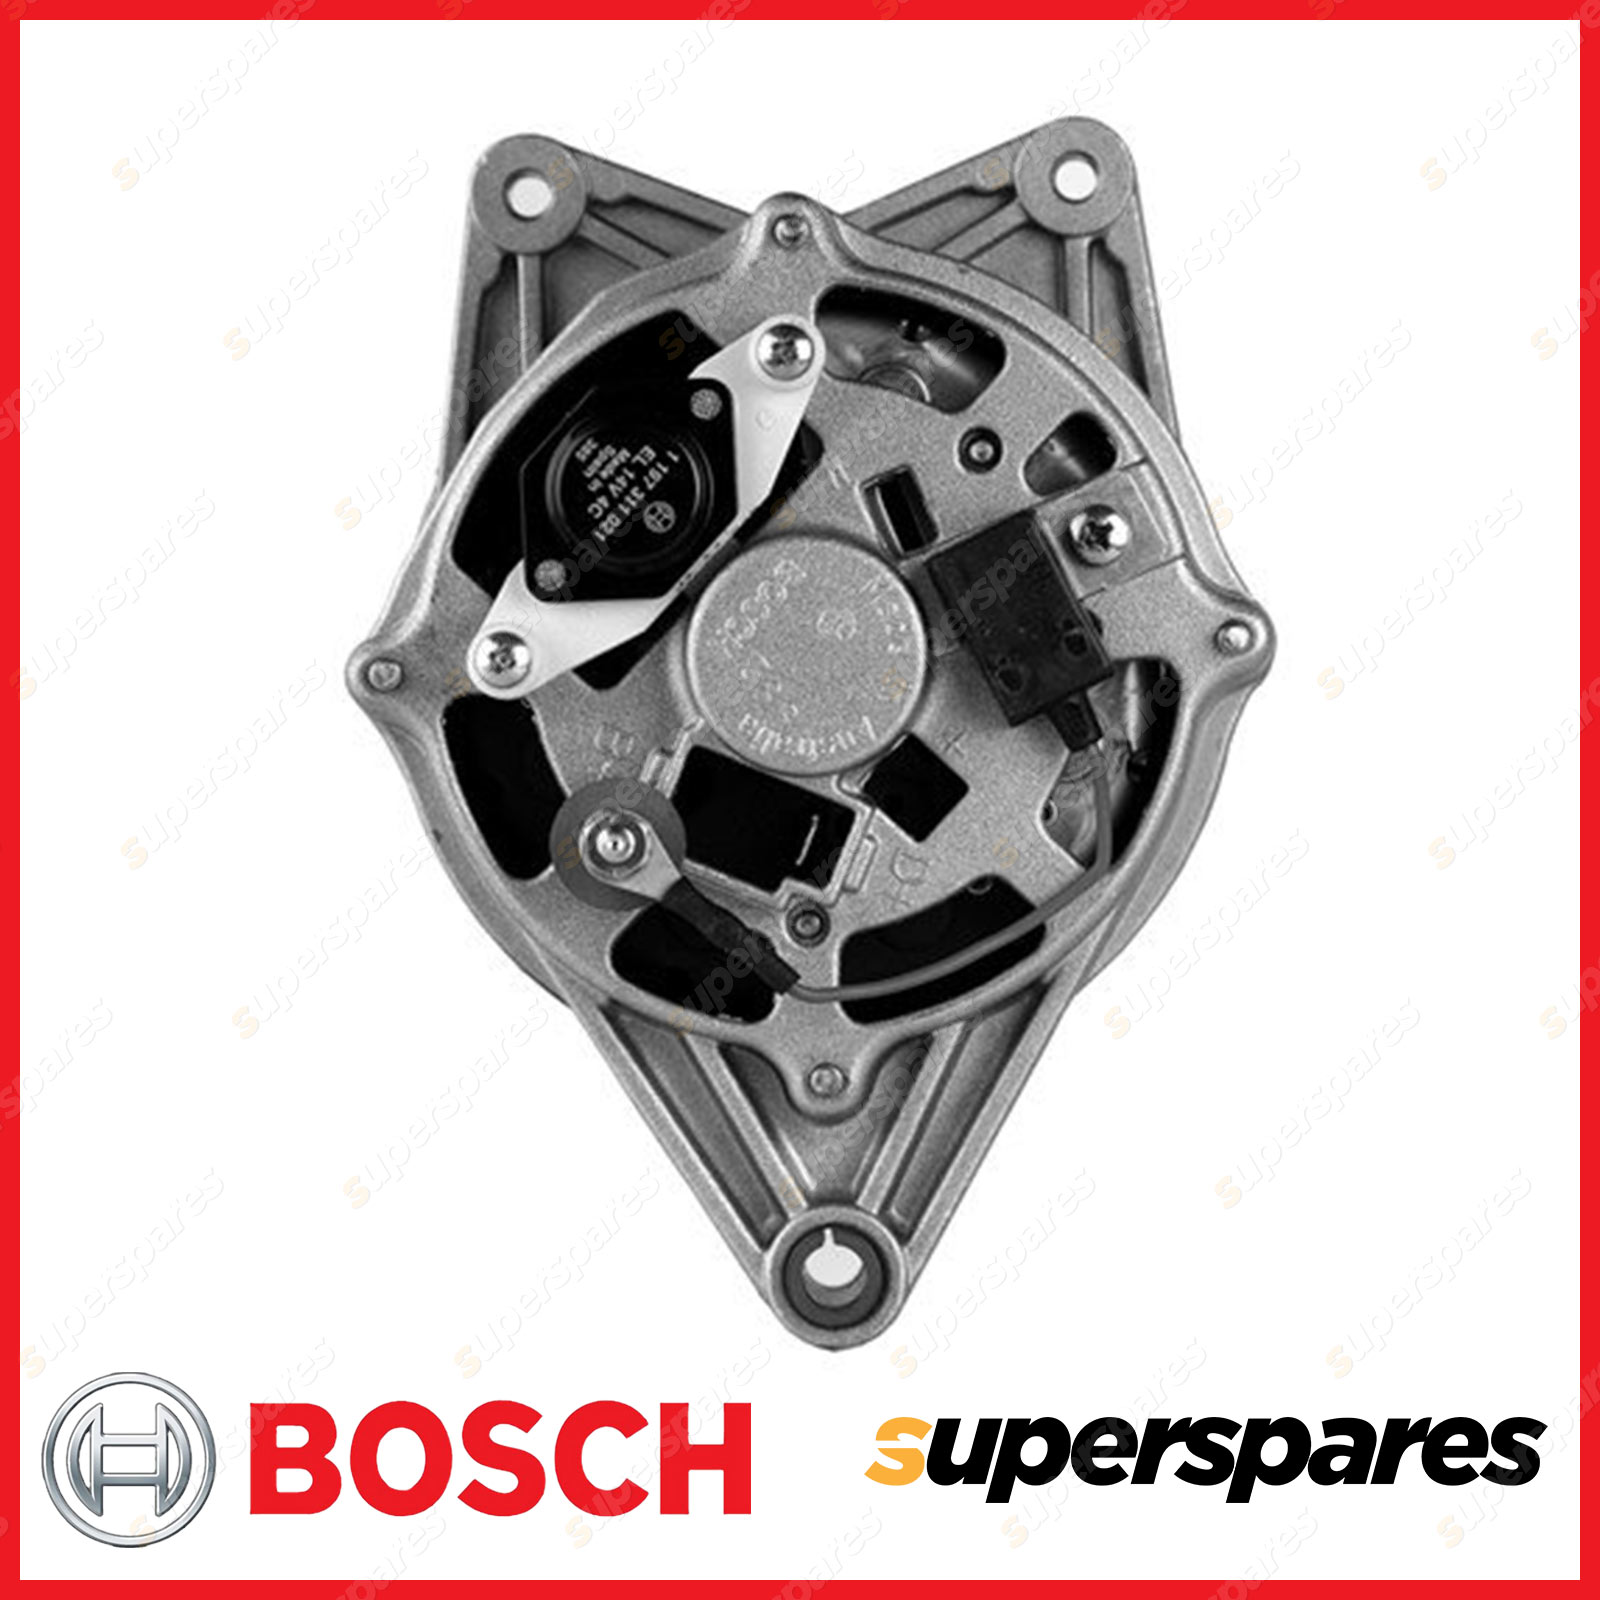 Bosch Alternator for Mitsubishi Sigma Scorpion GE GH GJ GK